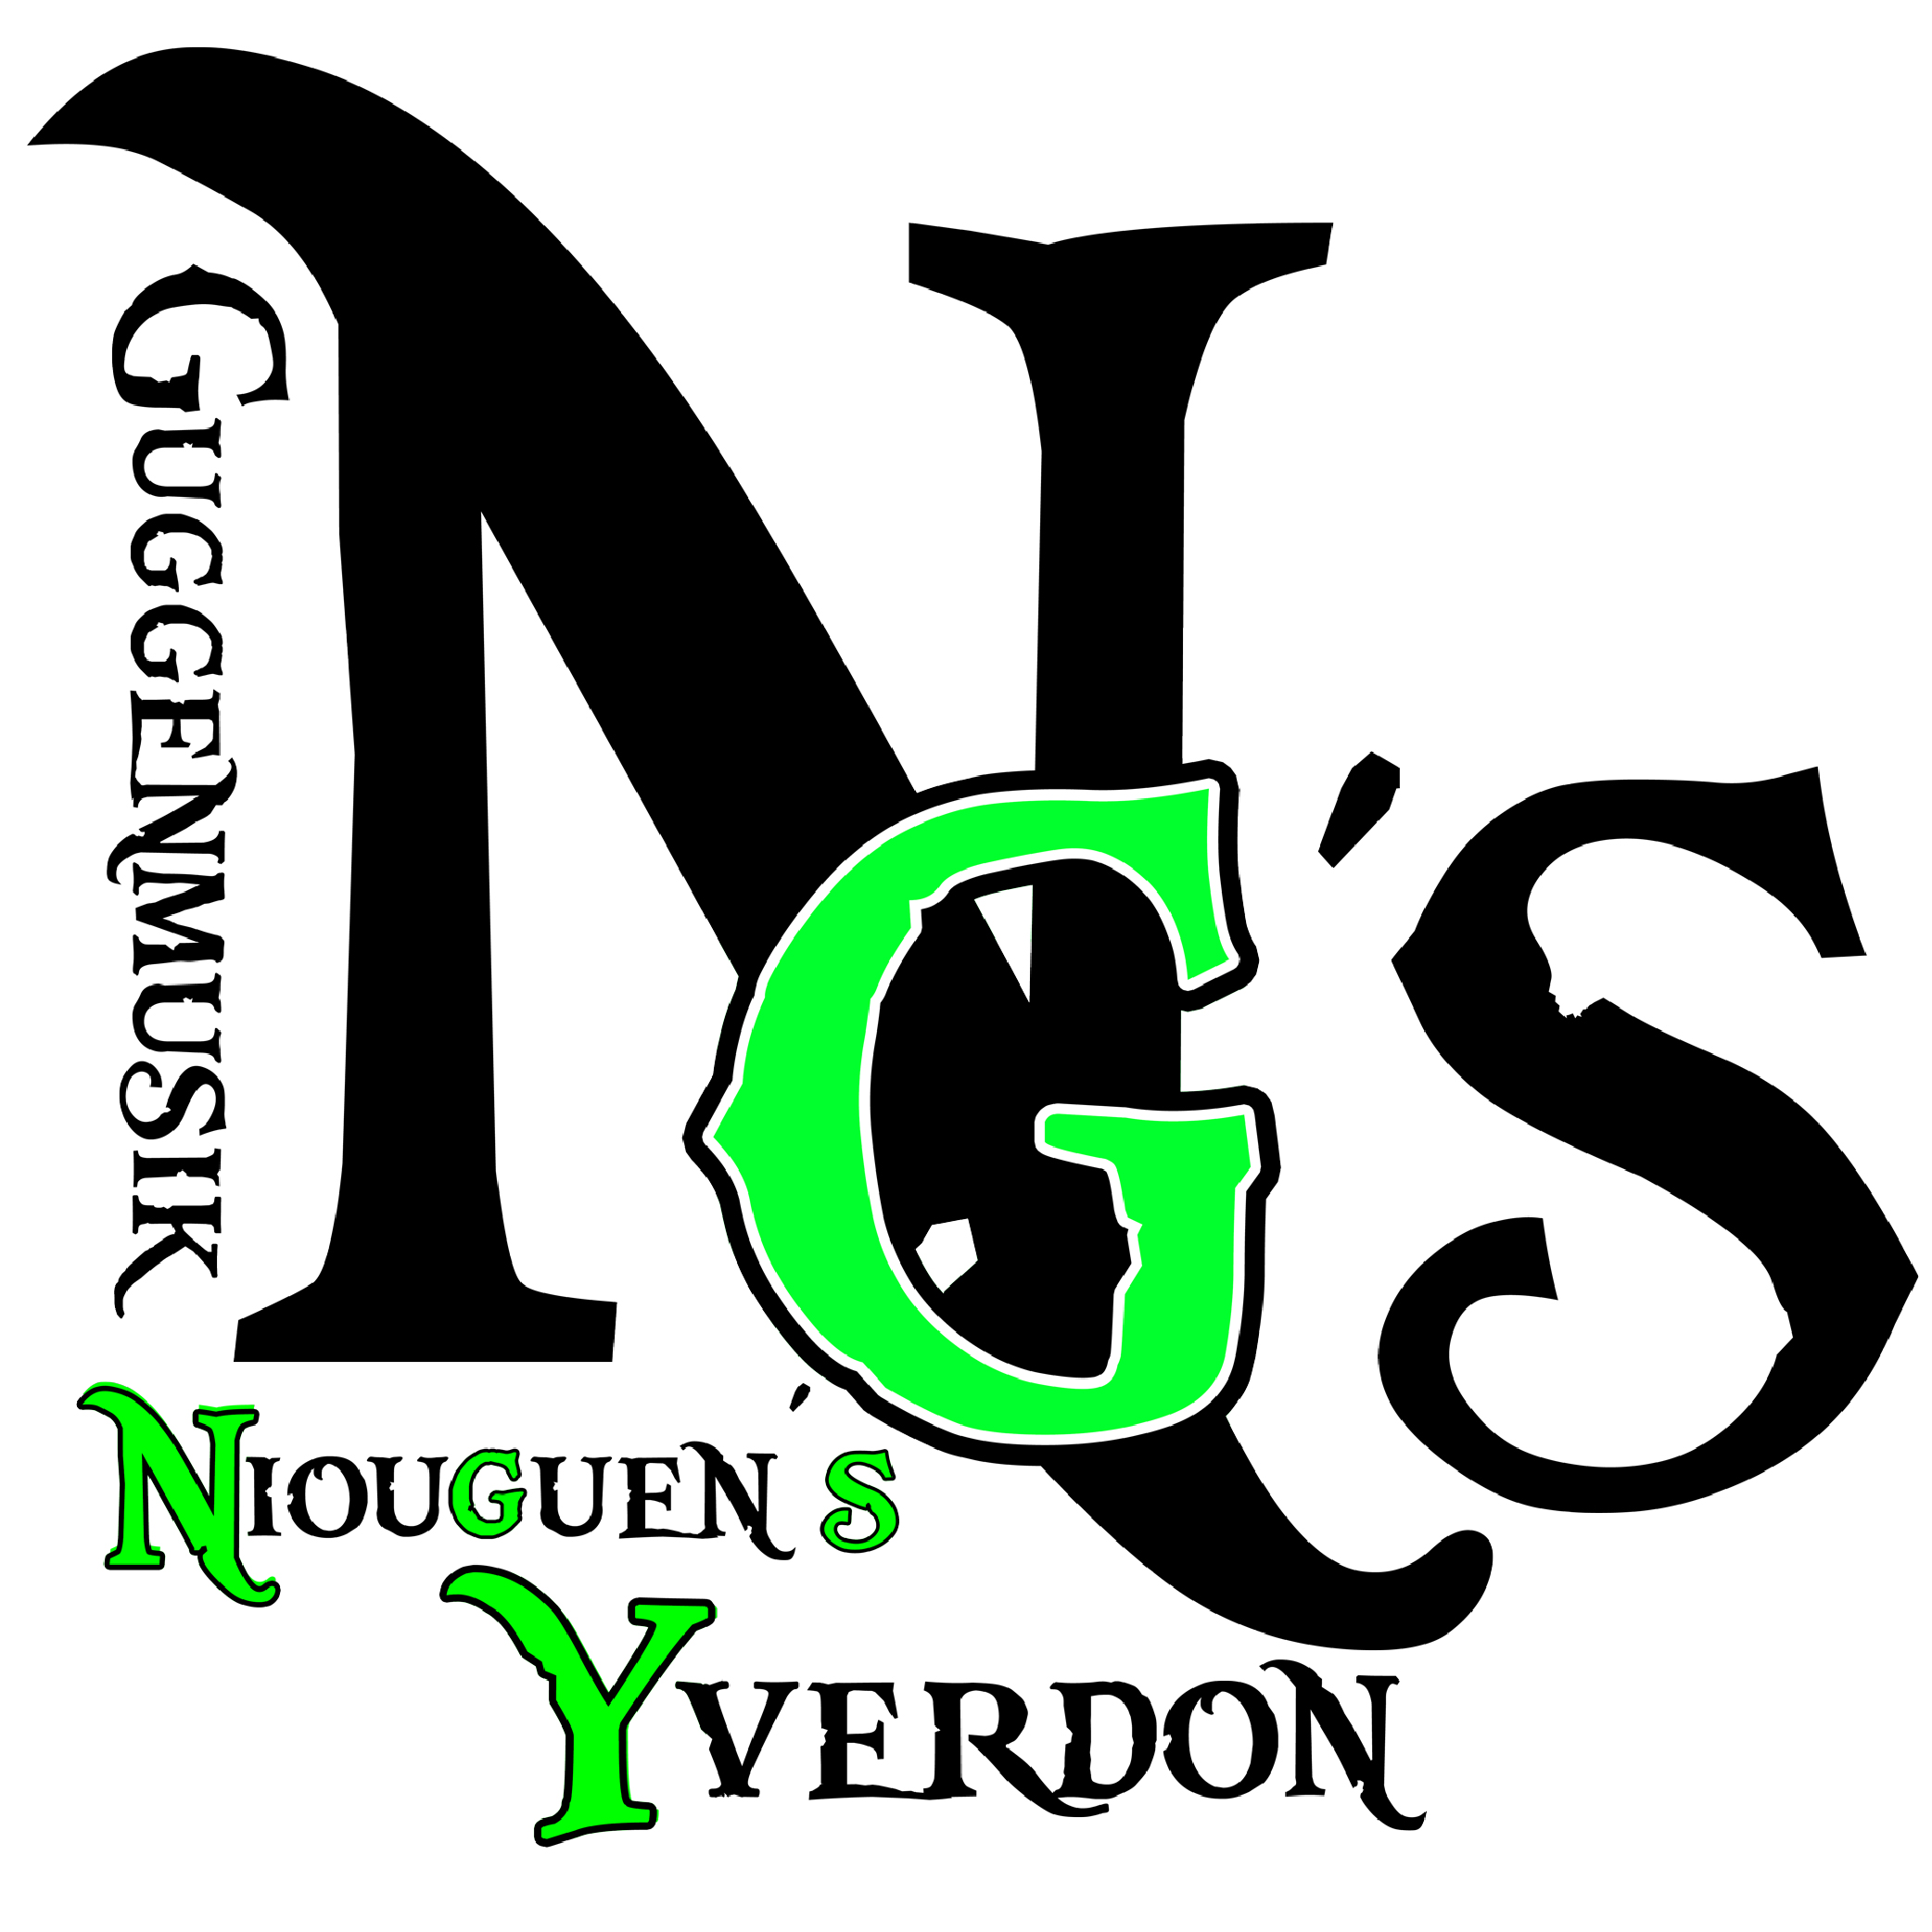 La Niougen's